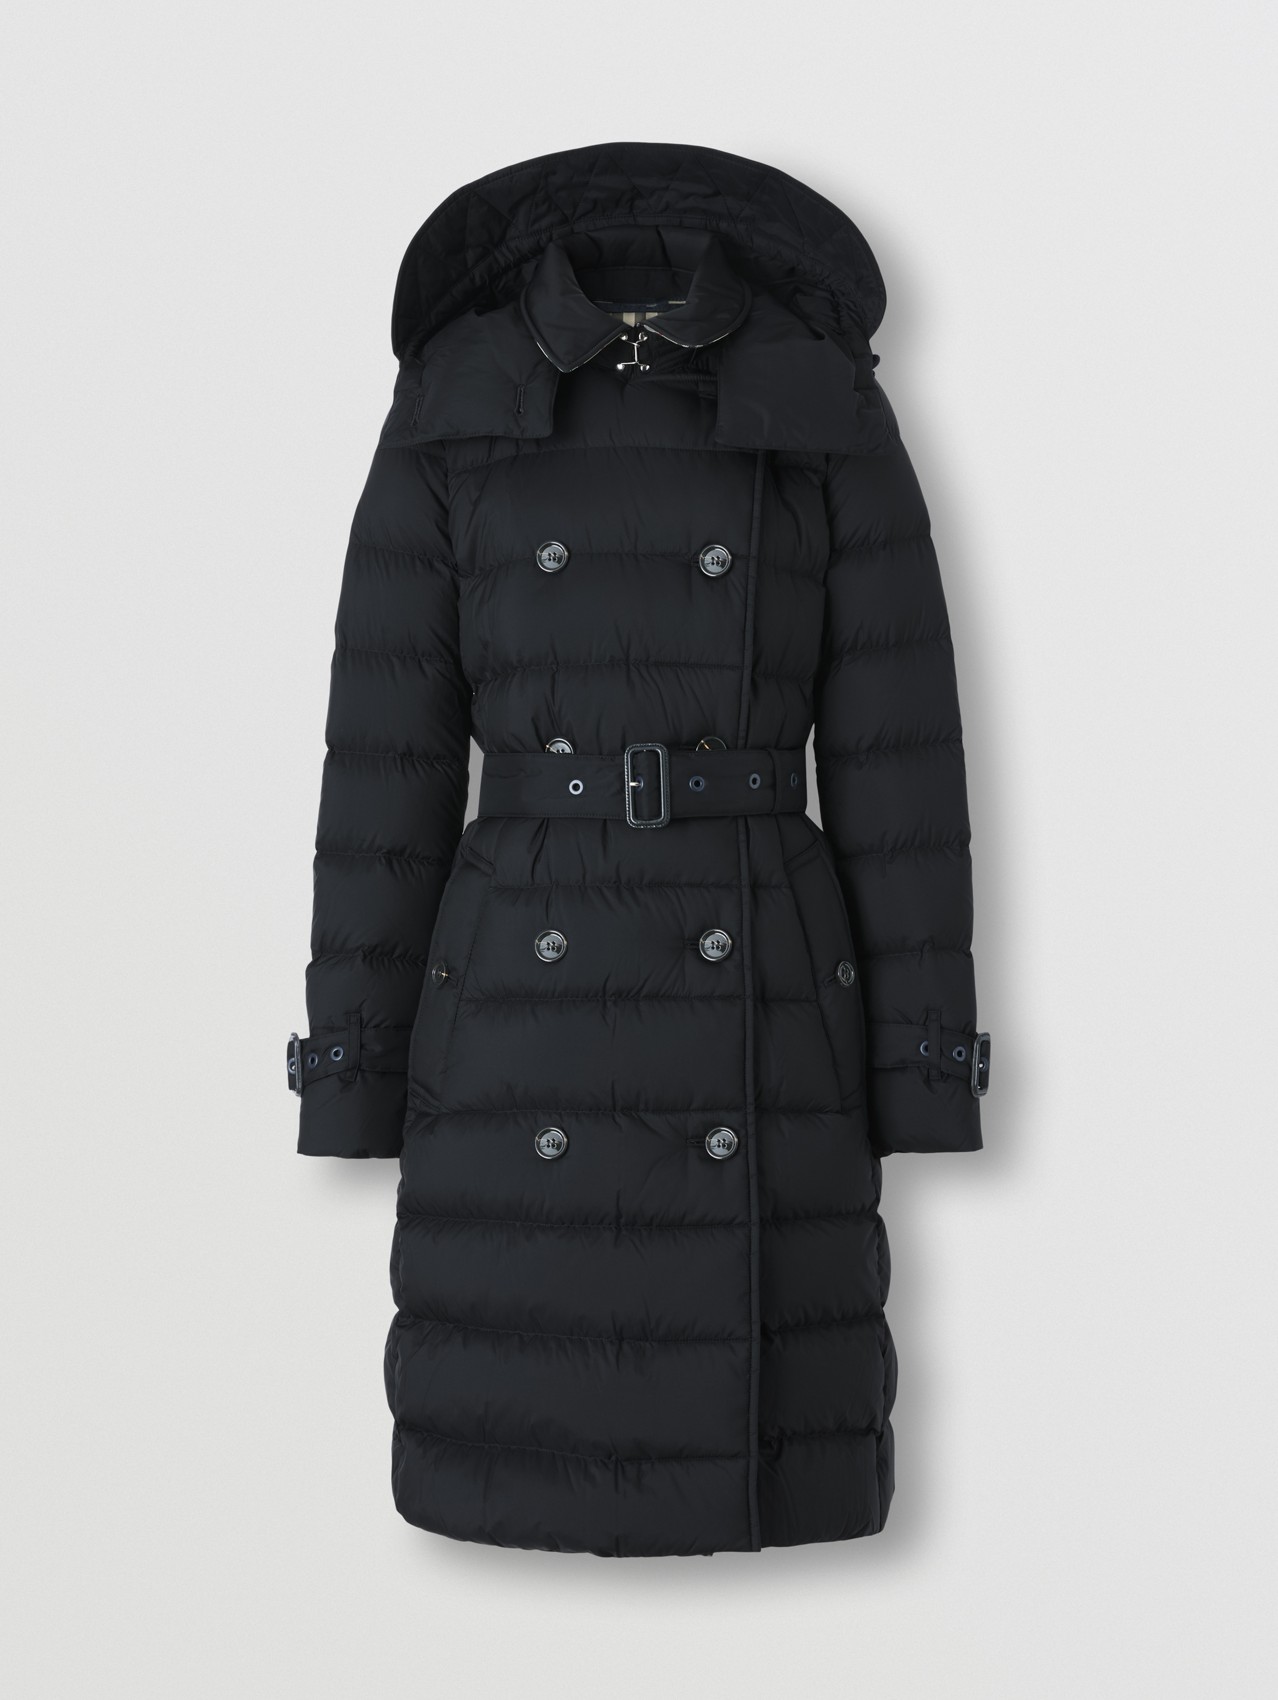 Abrigo con relleno de plumón y capucha extraíble (Negro Marino)